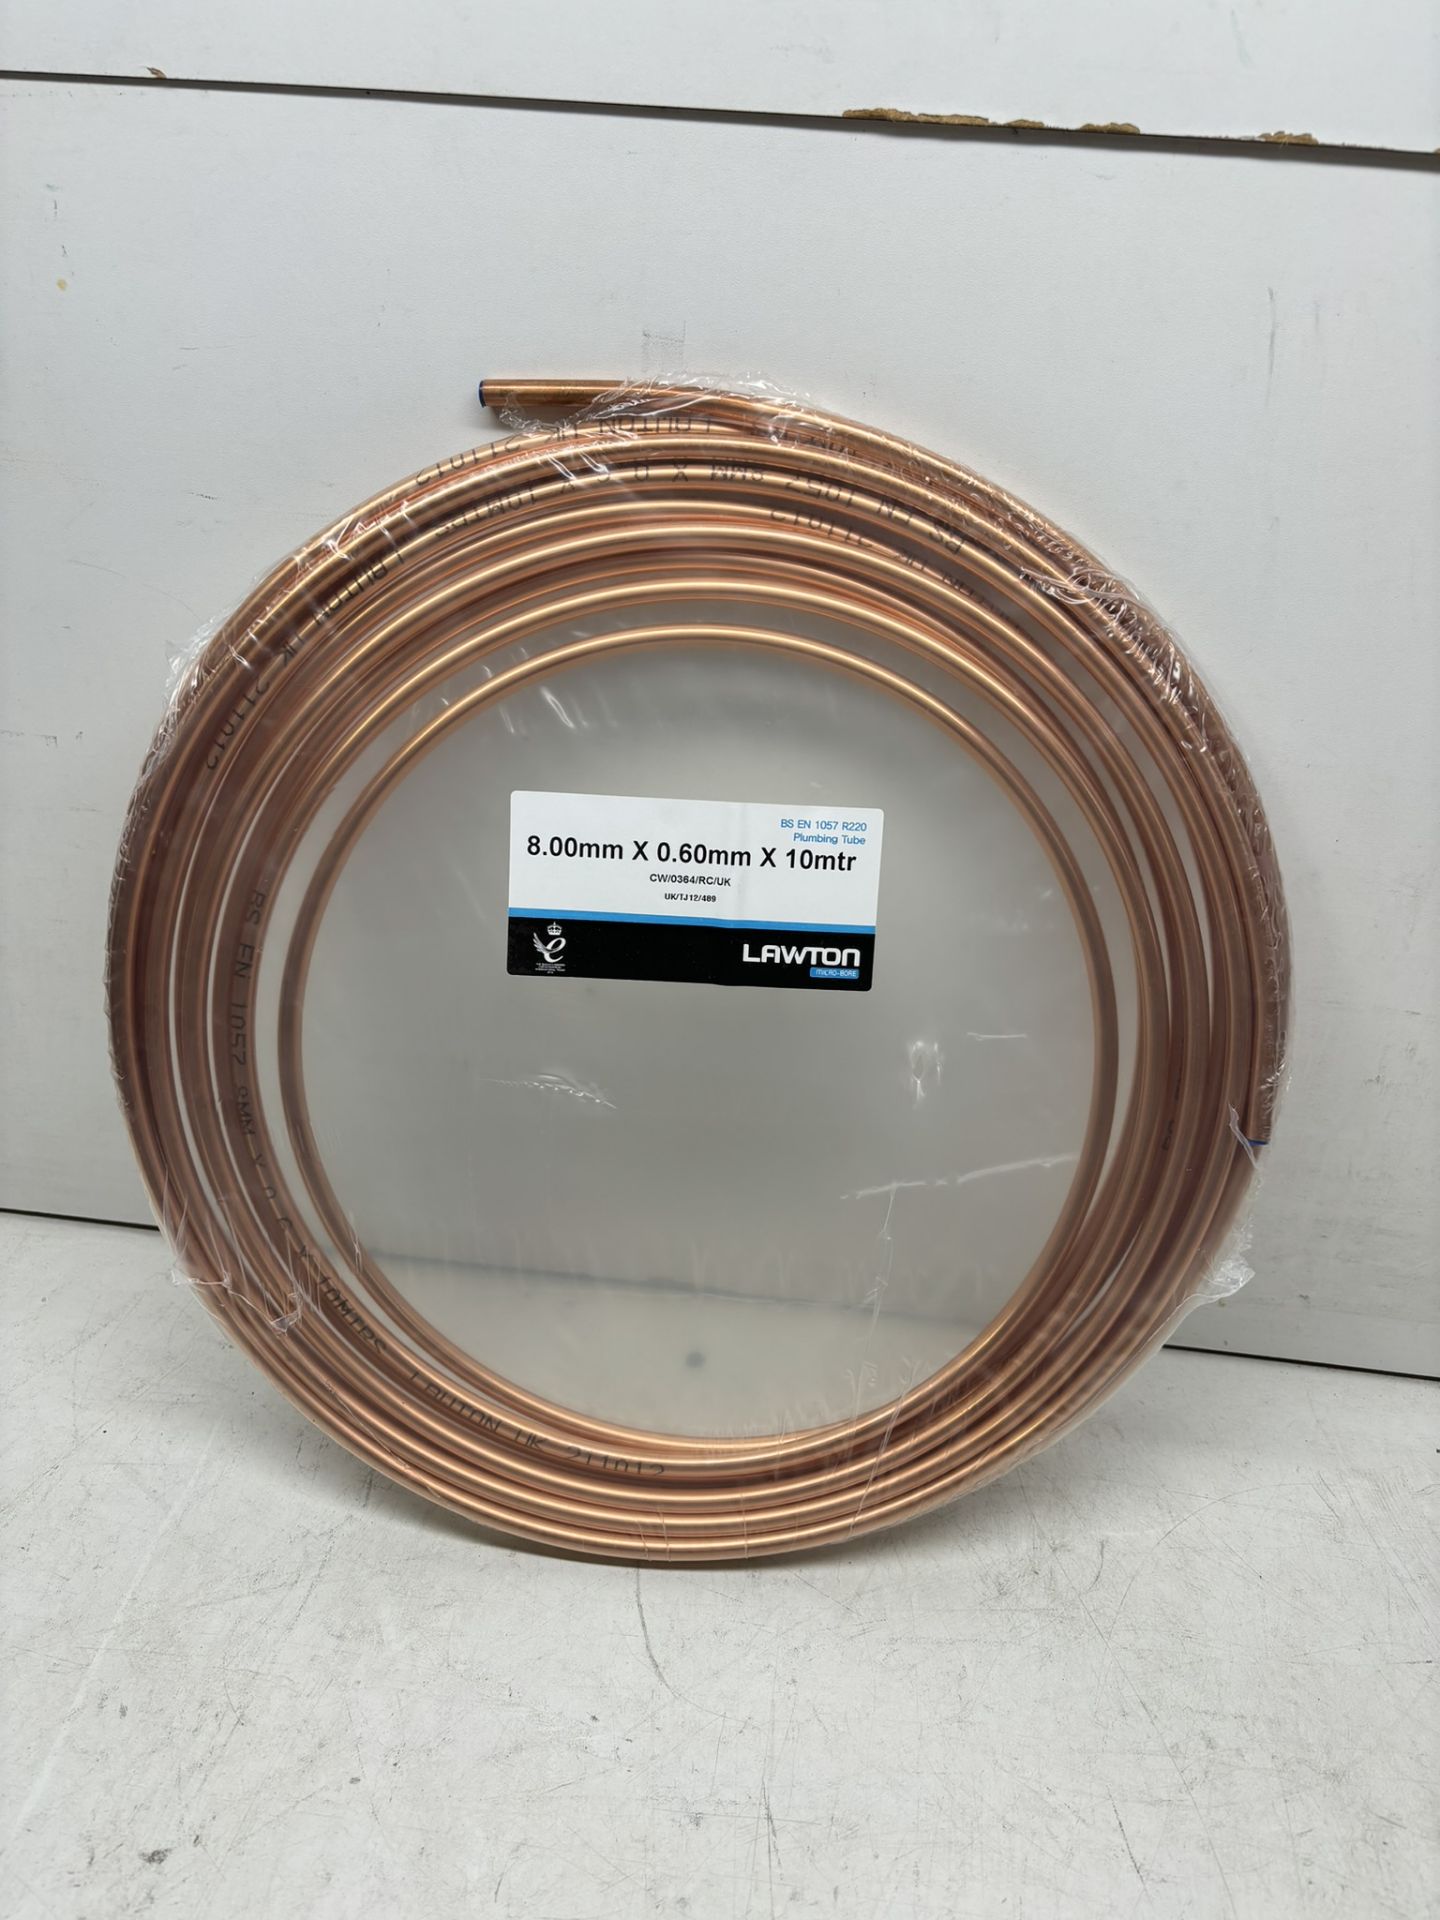 5 x Lawton 8.00mm x 0.60mm x 10Mtr Copper Plumbing Tube Coils - Image 2 of 9